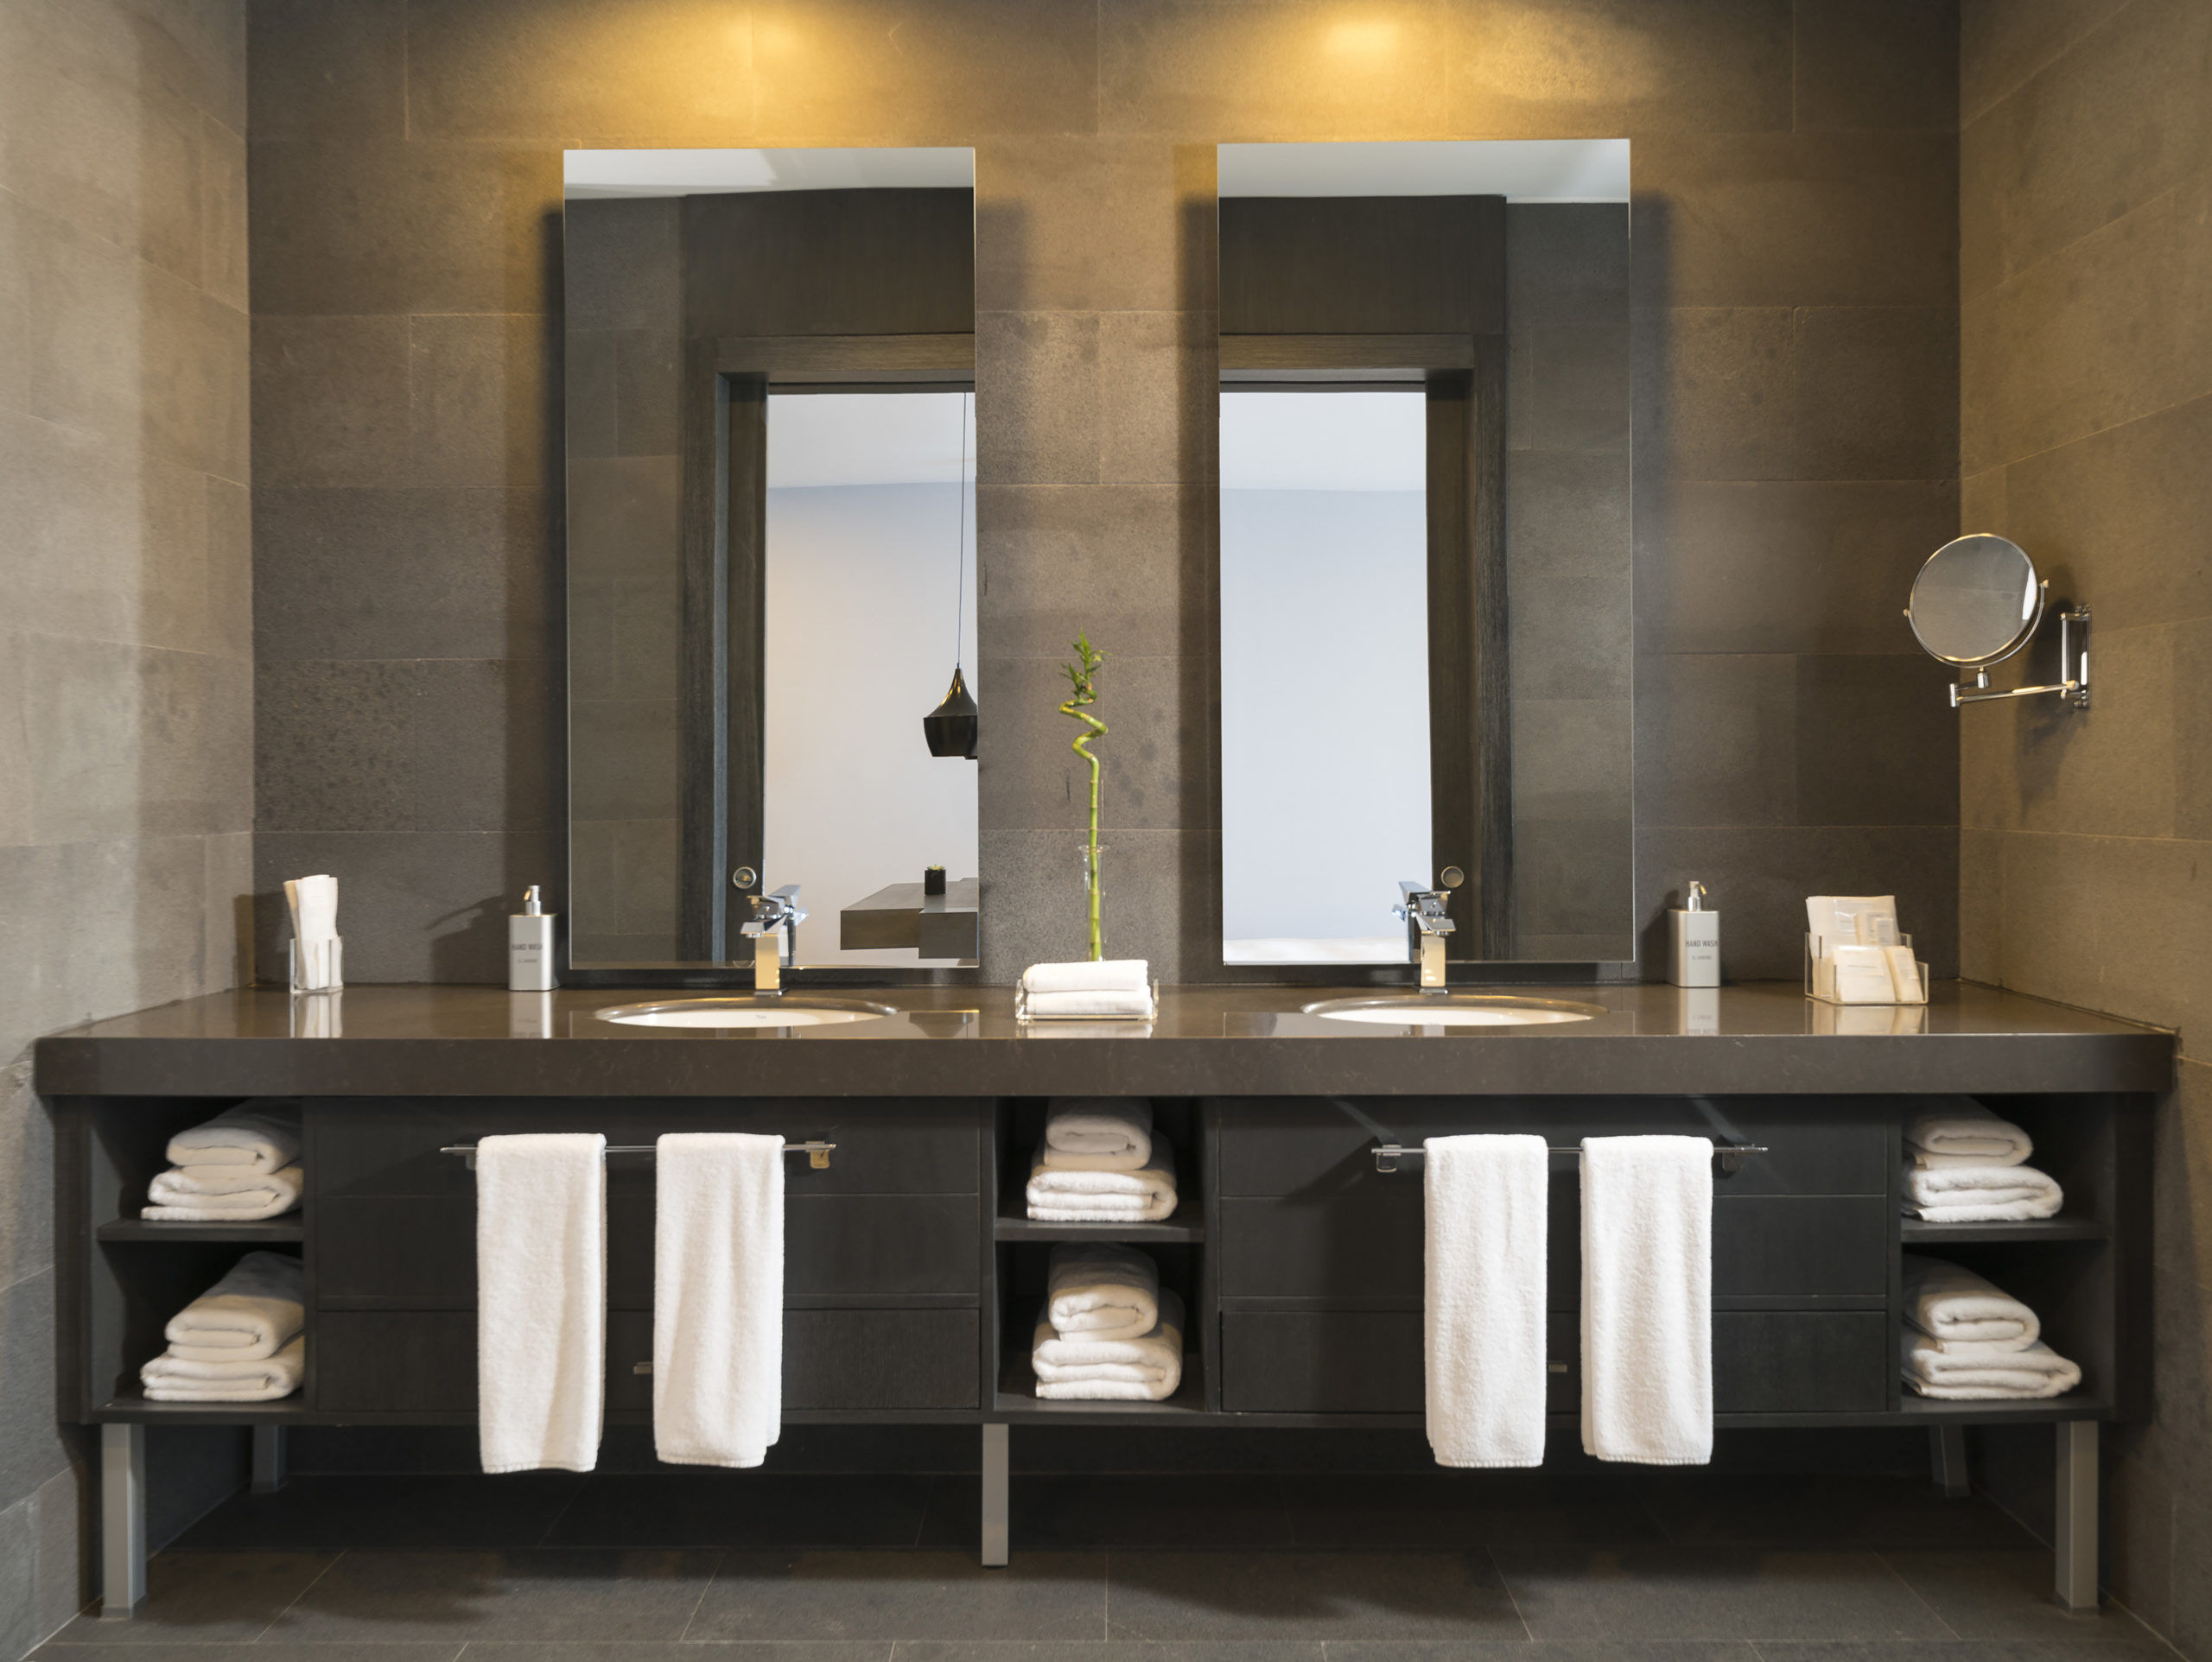 Best of Bathroom Décor Ideas for Your Home